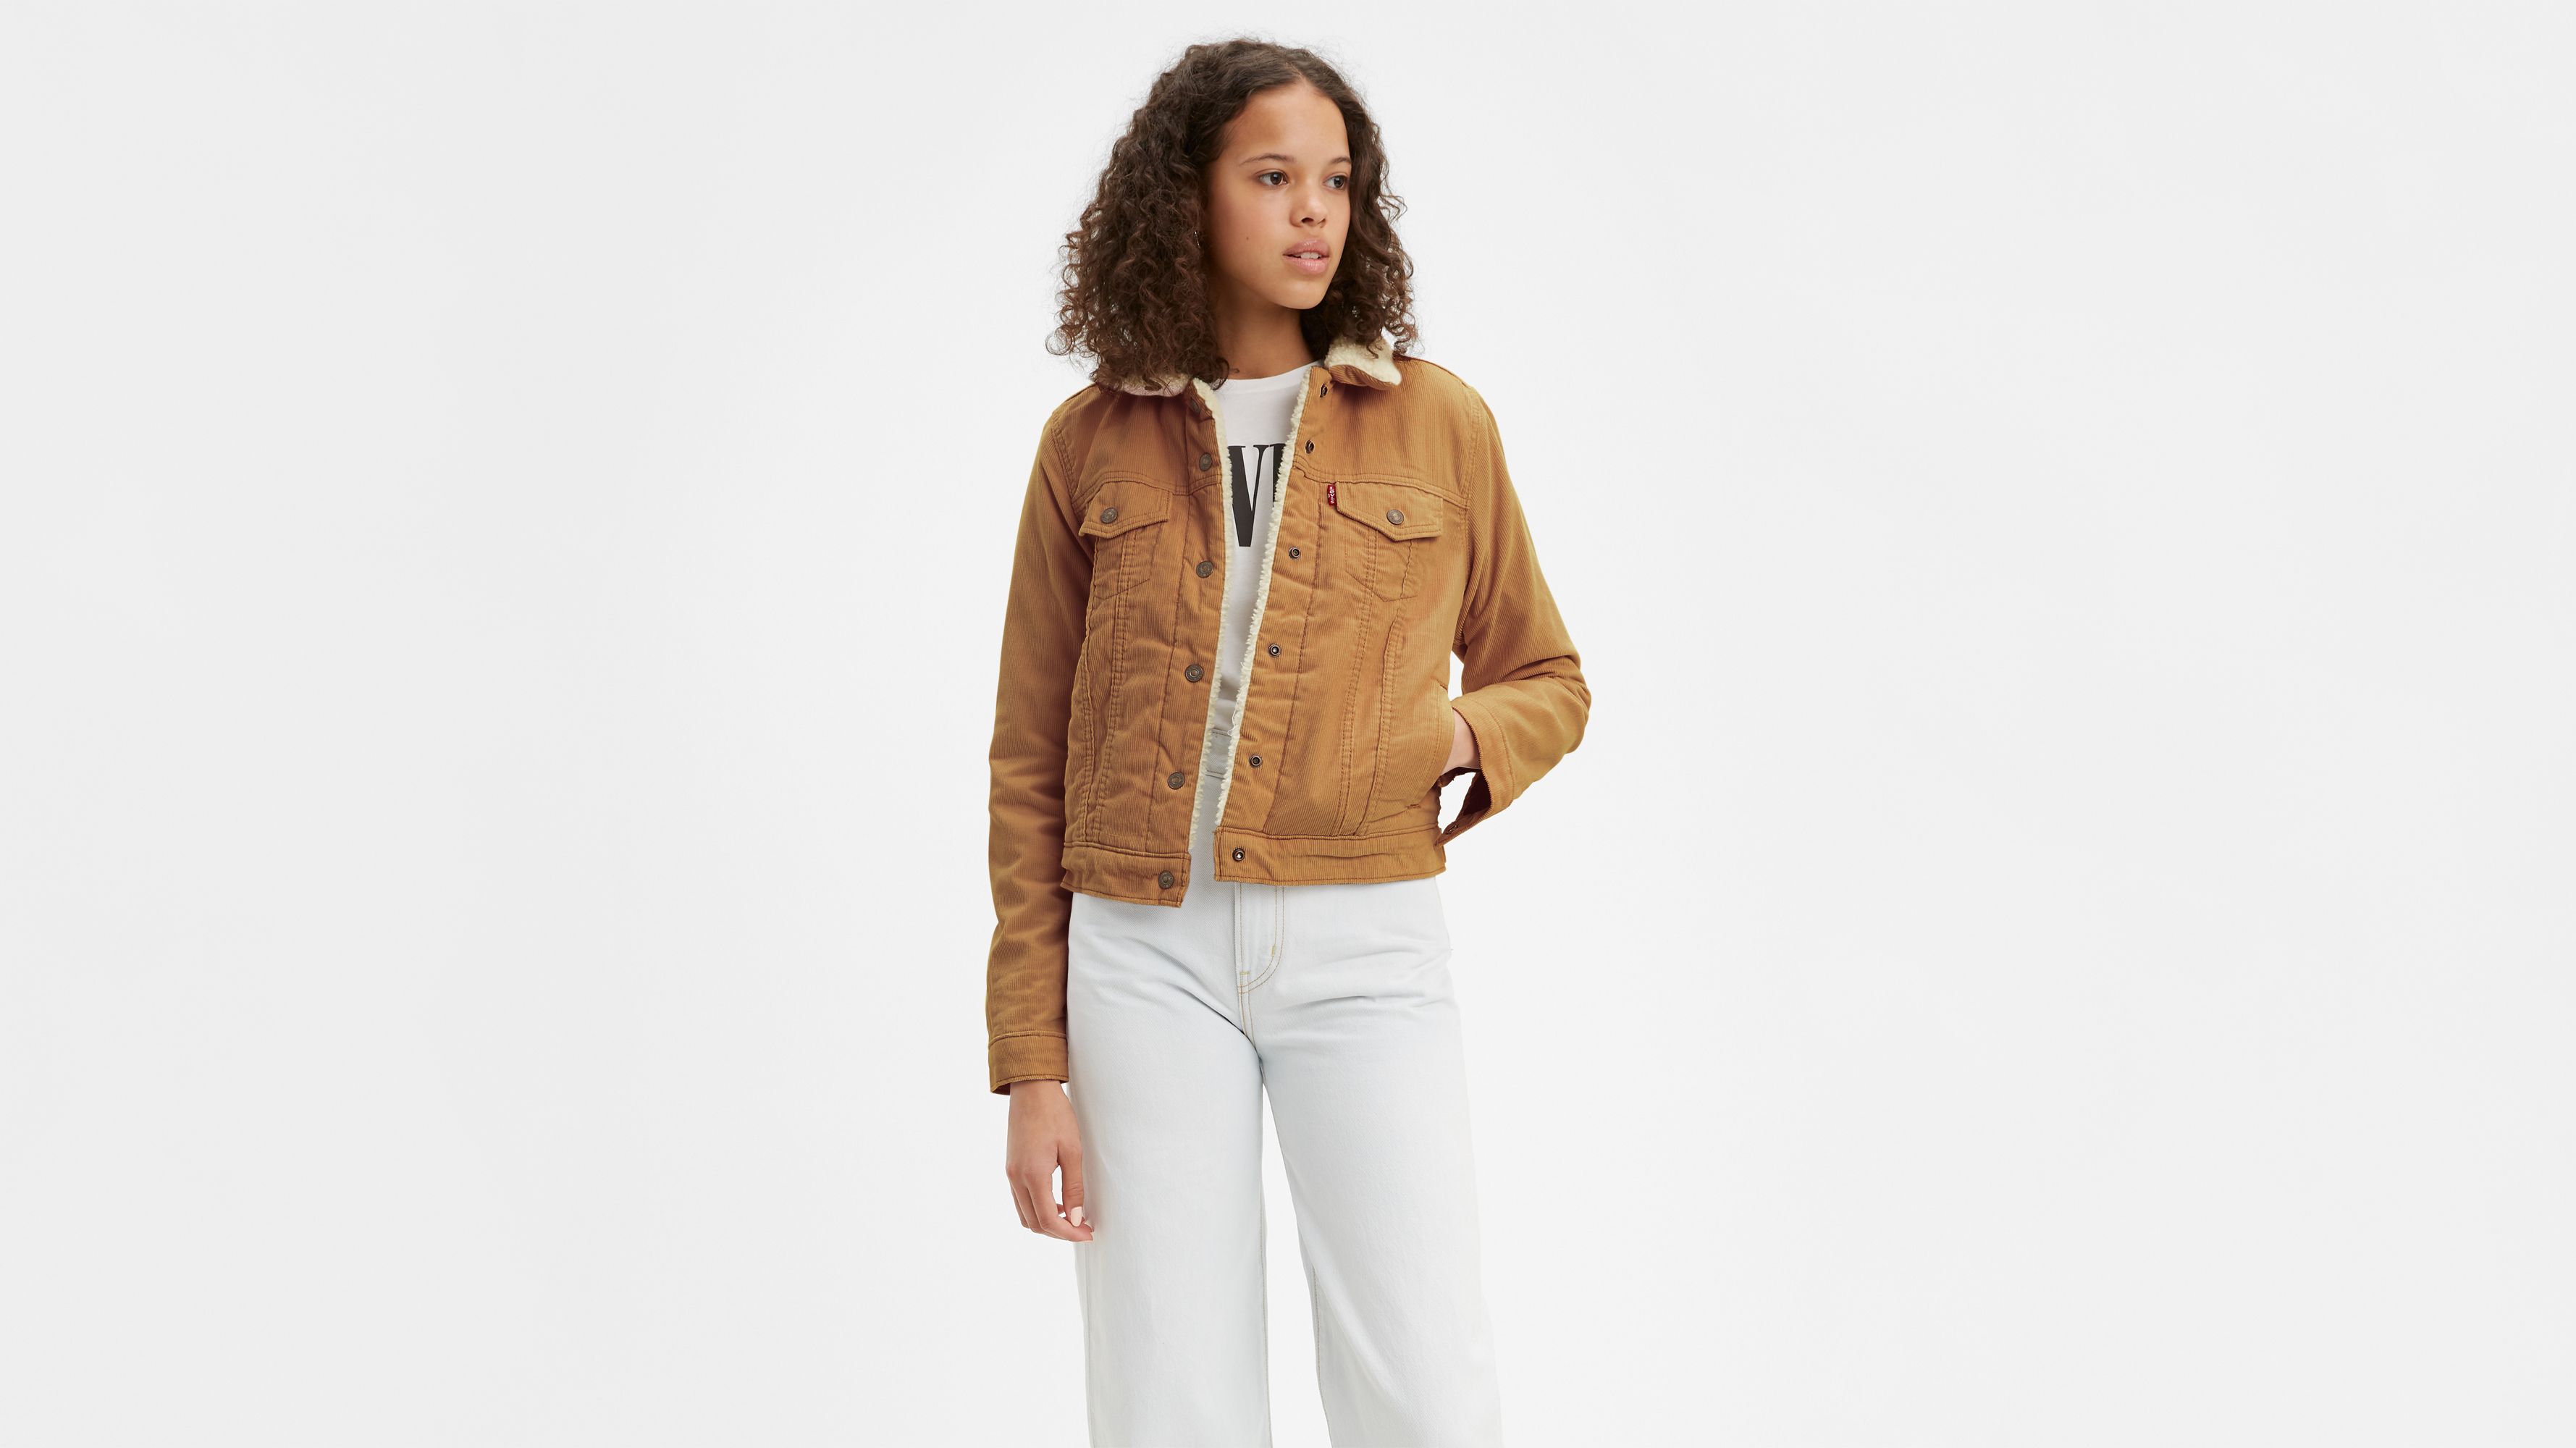 sherpa lined brown corduroy jacket